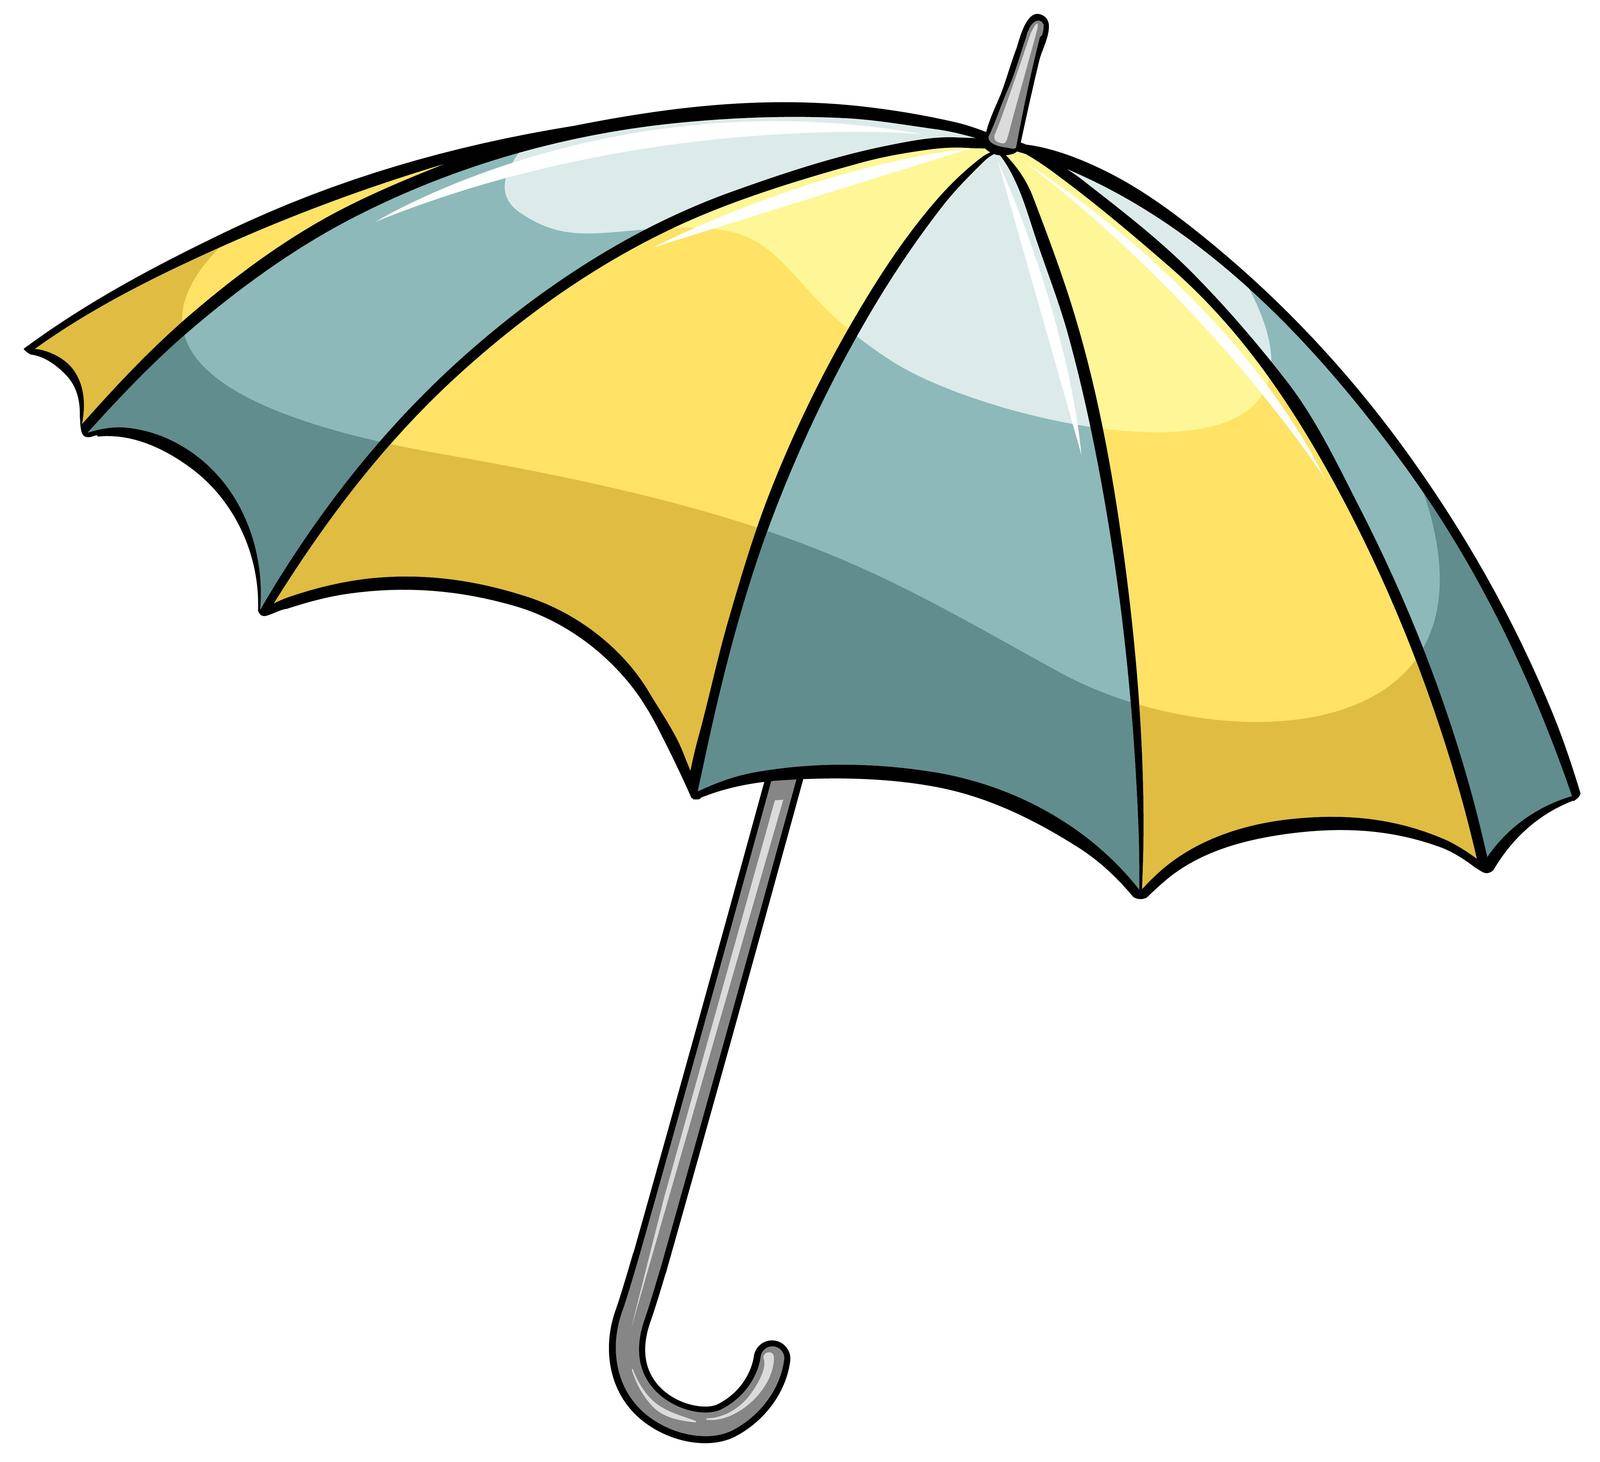 An umbrella by iimages